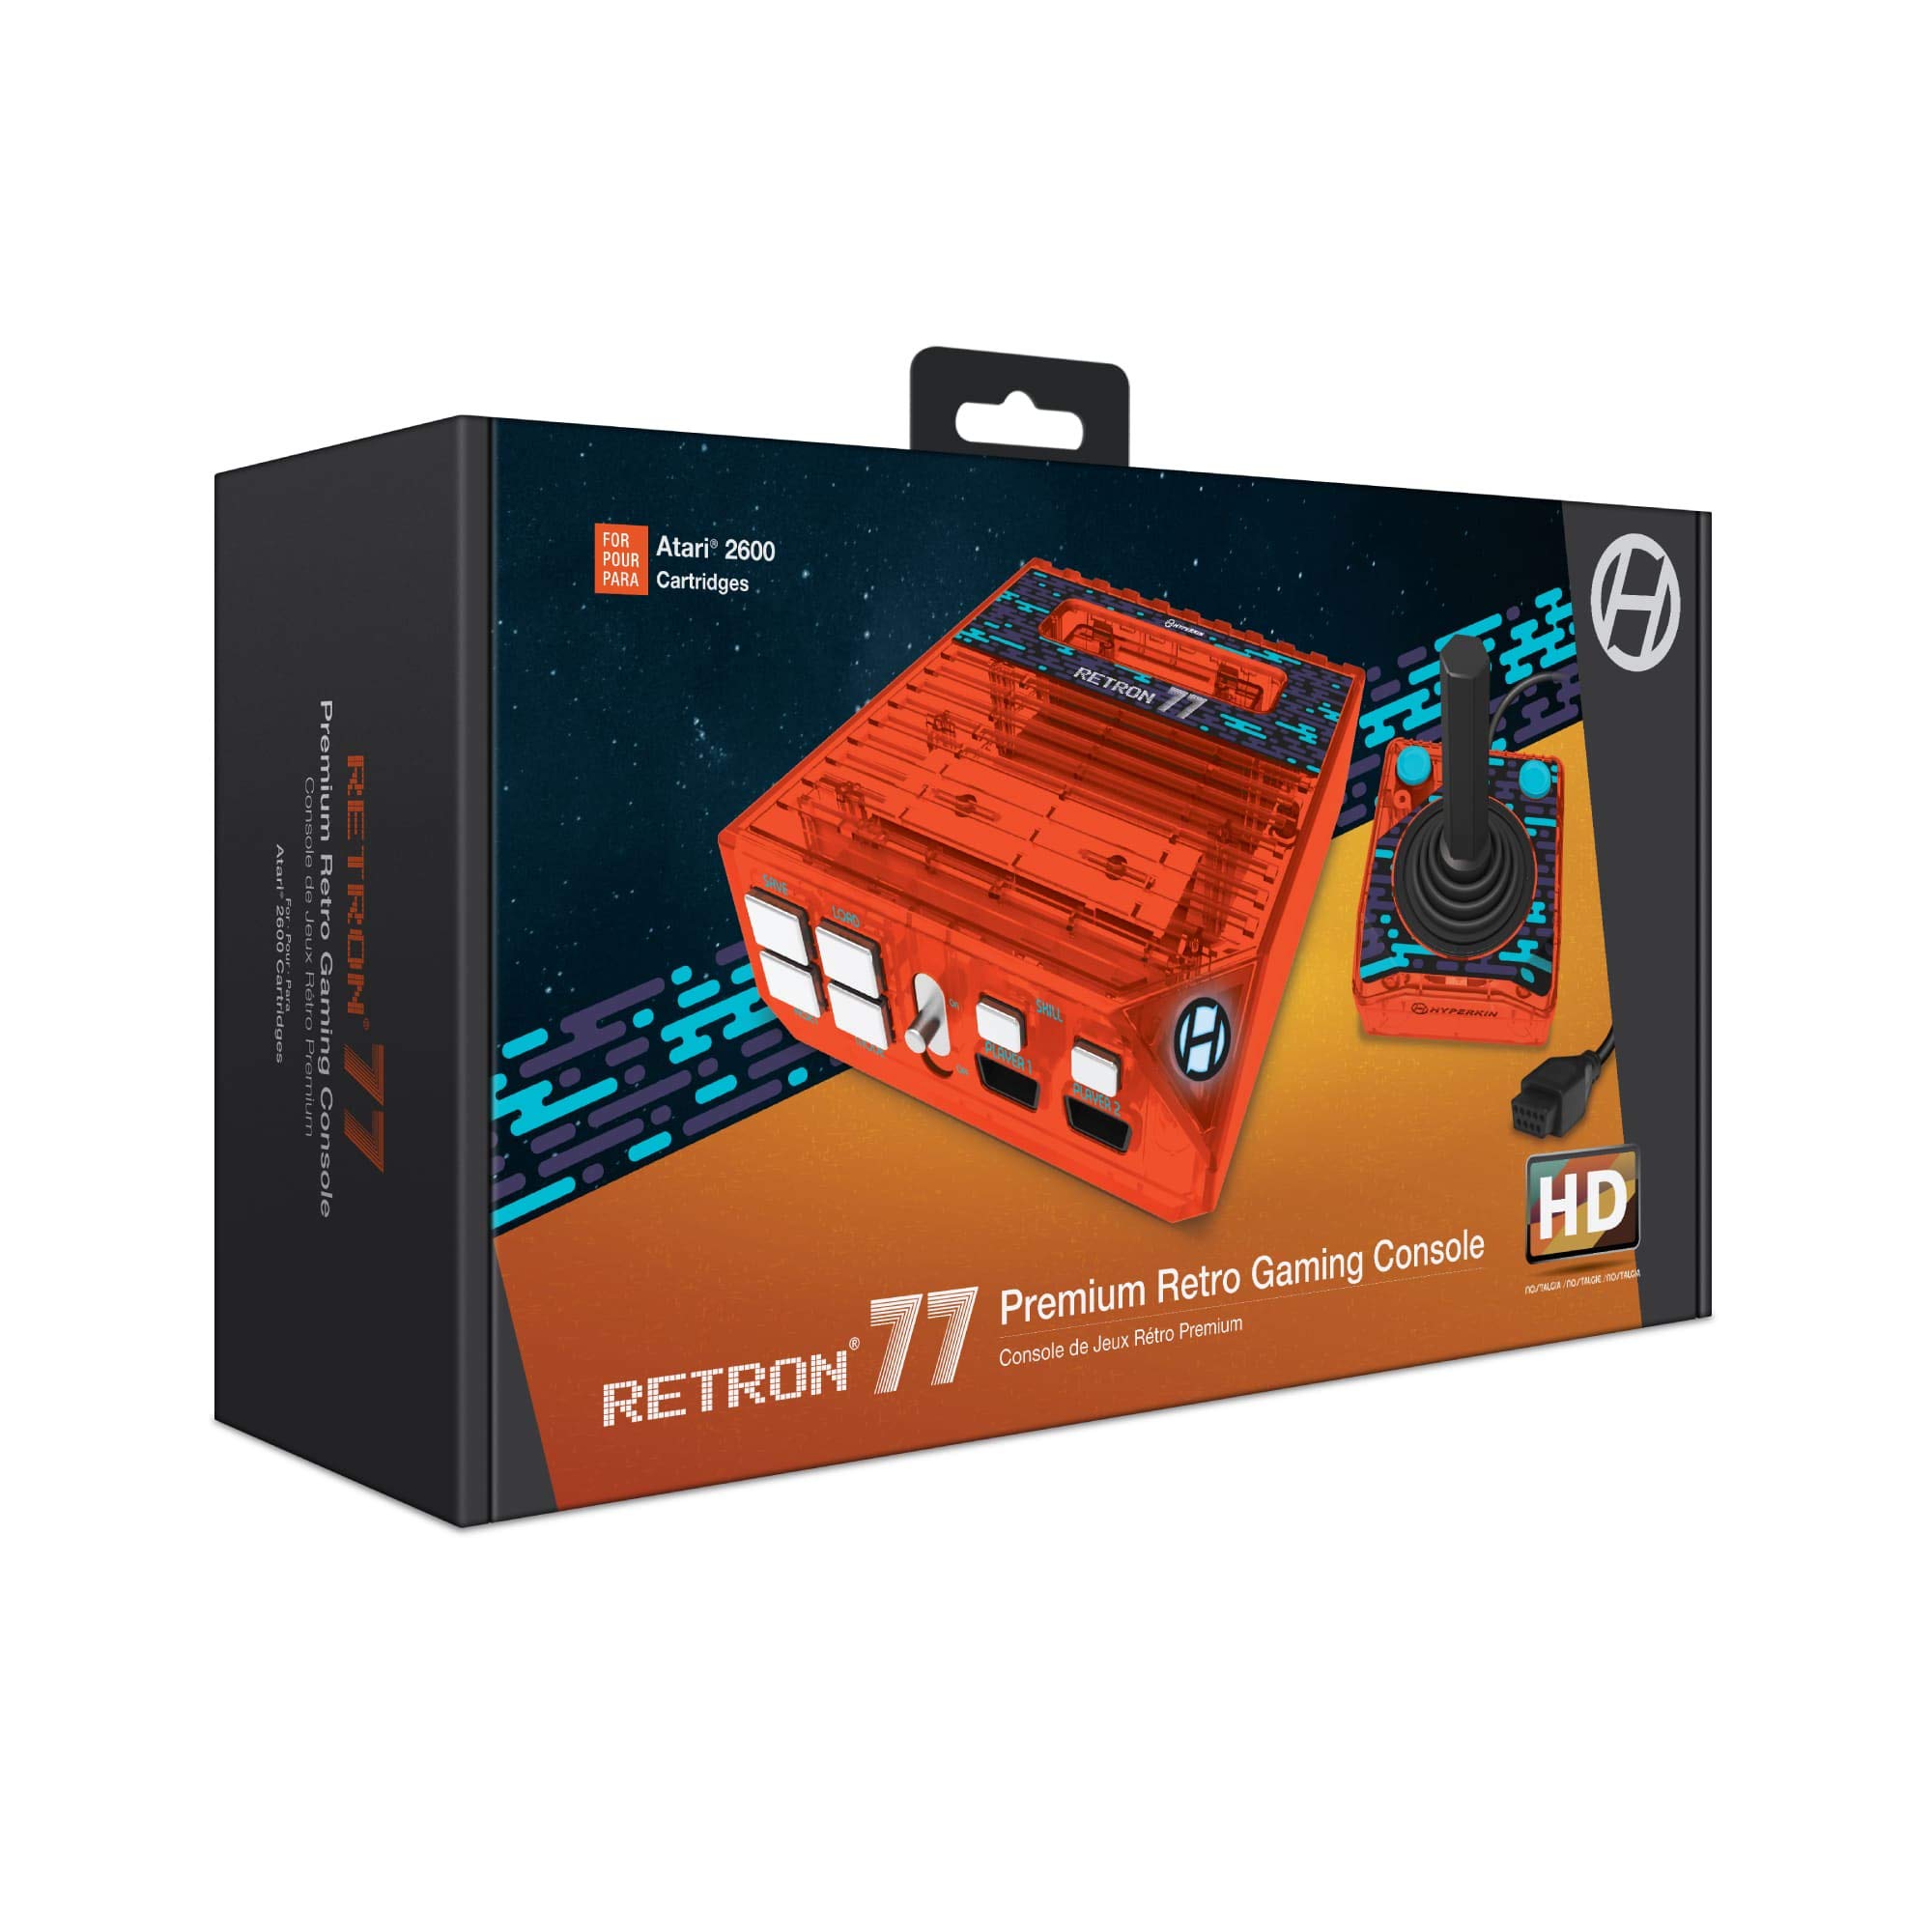 Hyperkin RetroN 77: HD Gaming Console for Atari 2600 (Retro Amber) - Not Machine Specific & 